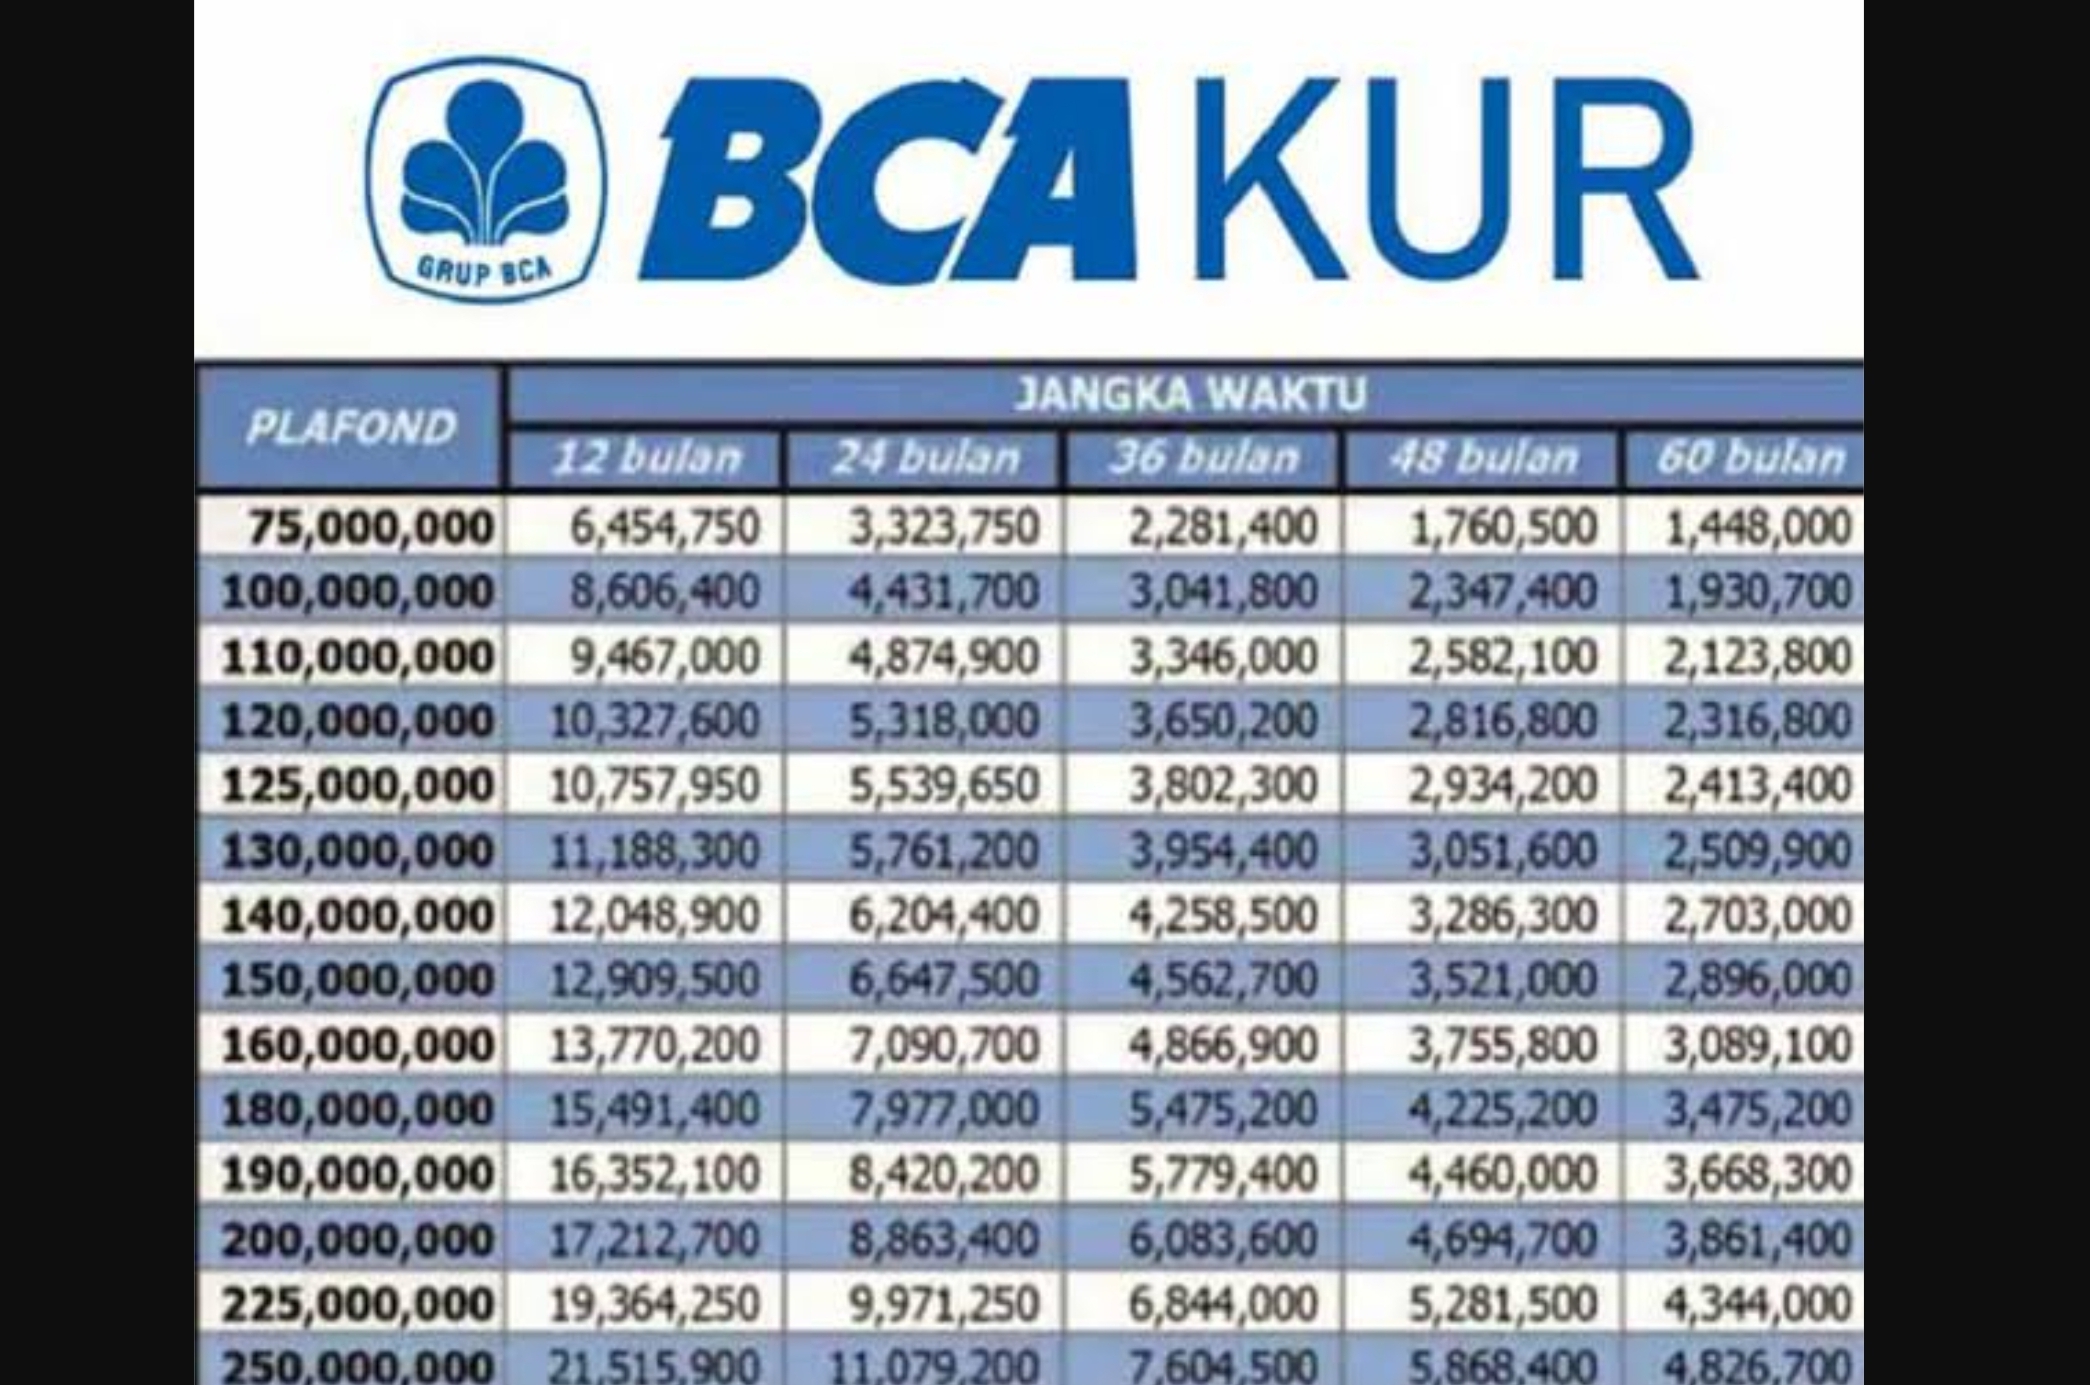 Sebelum Mengajukan, Cek Dulu Limit Pinjaman KUR Bank BCA, Jangan sampai Salah